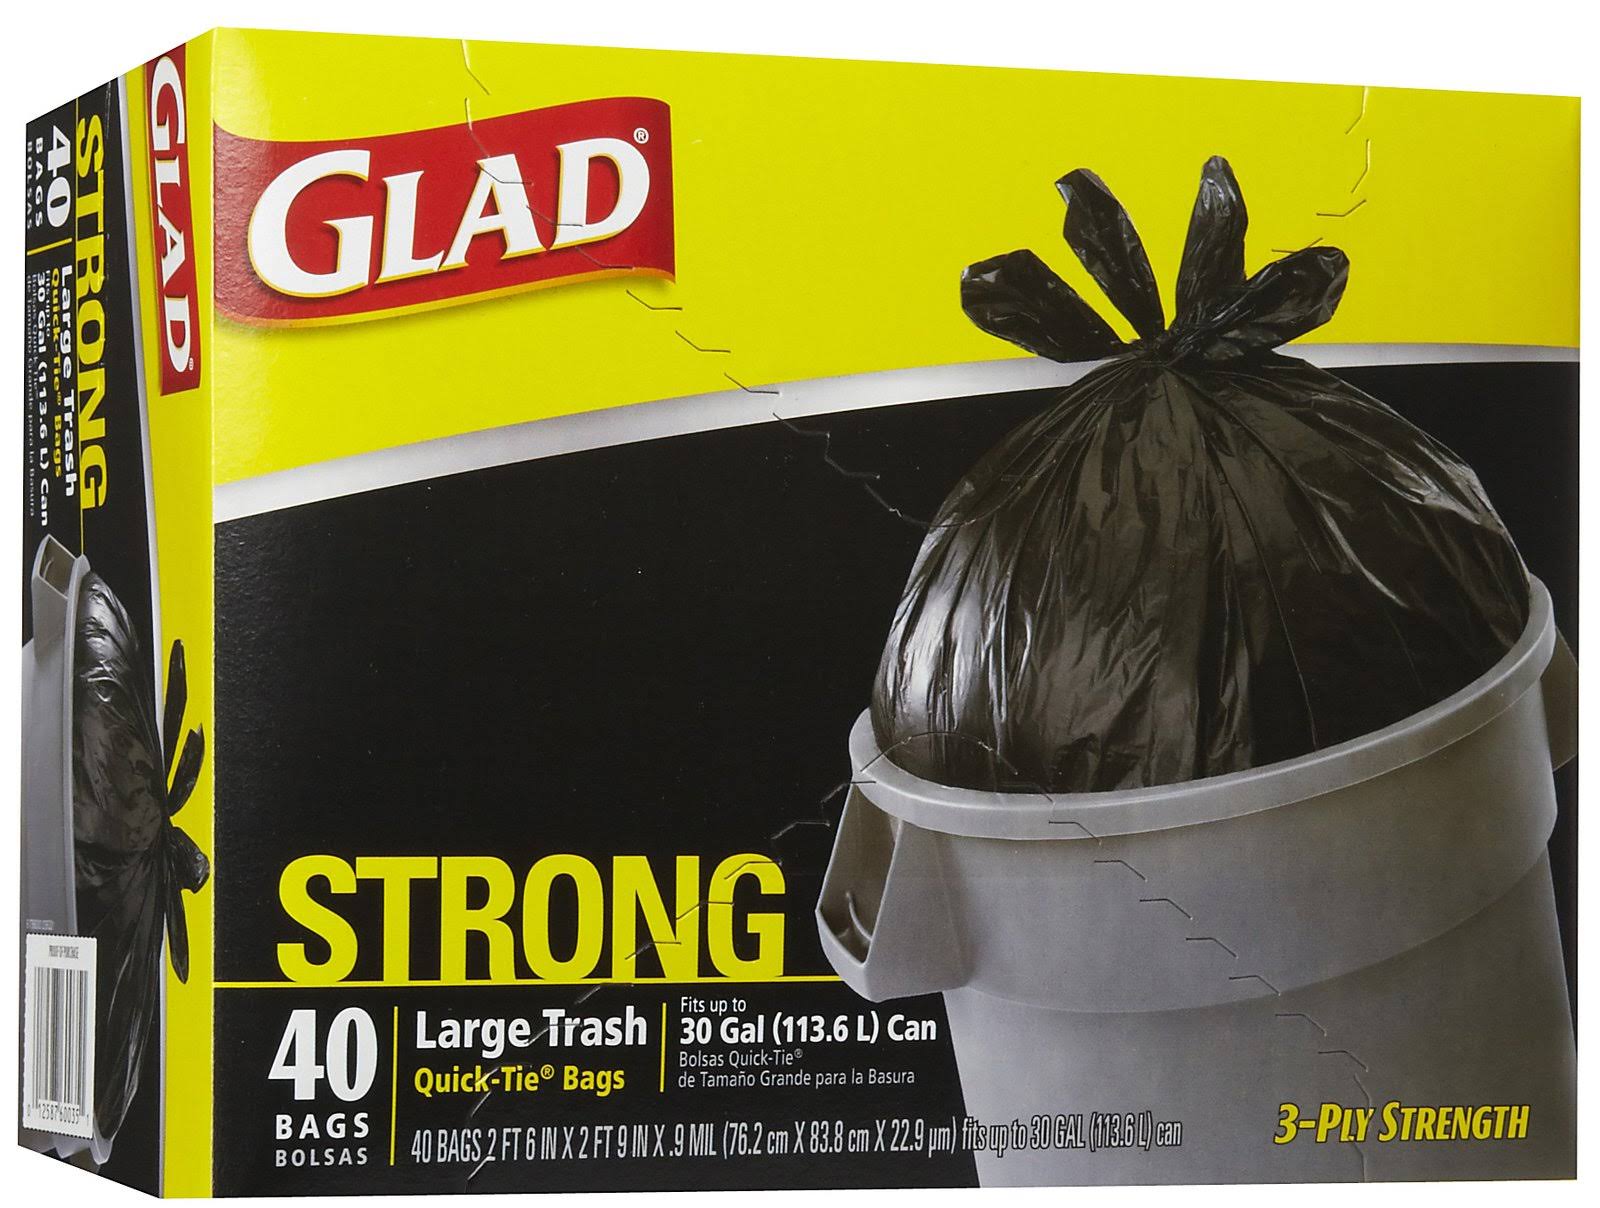 Glad Large Trash Bags - 30Gal, 40 Bags